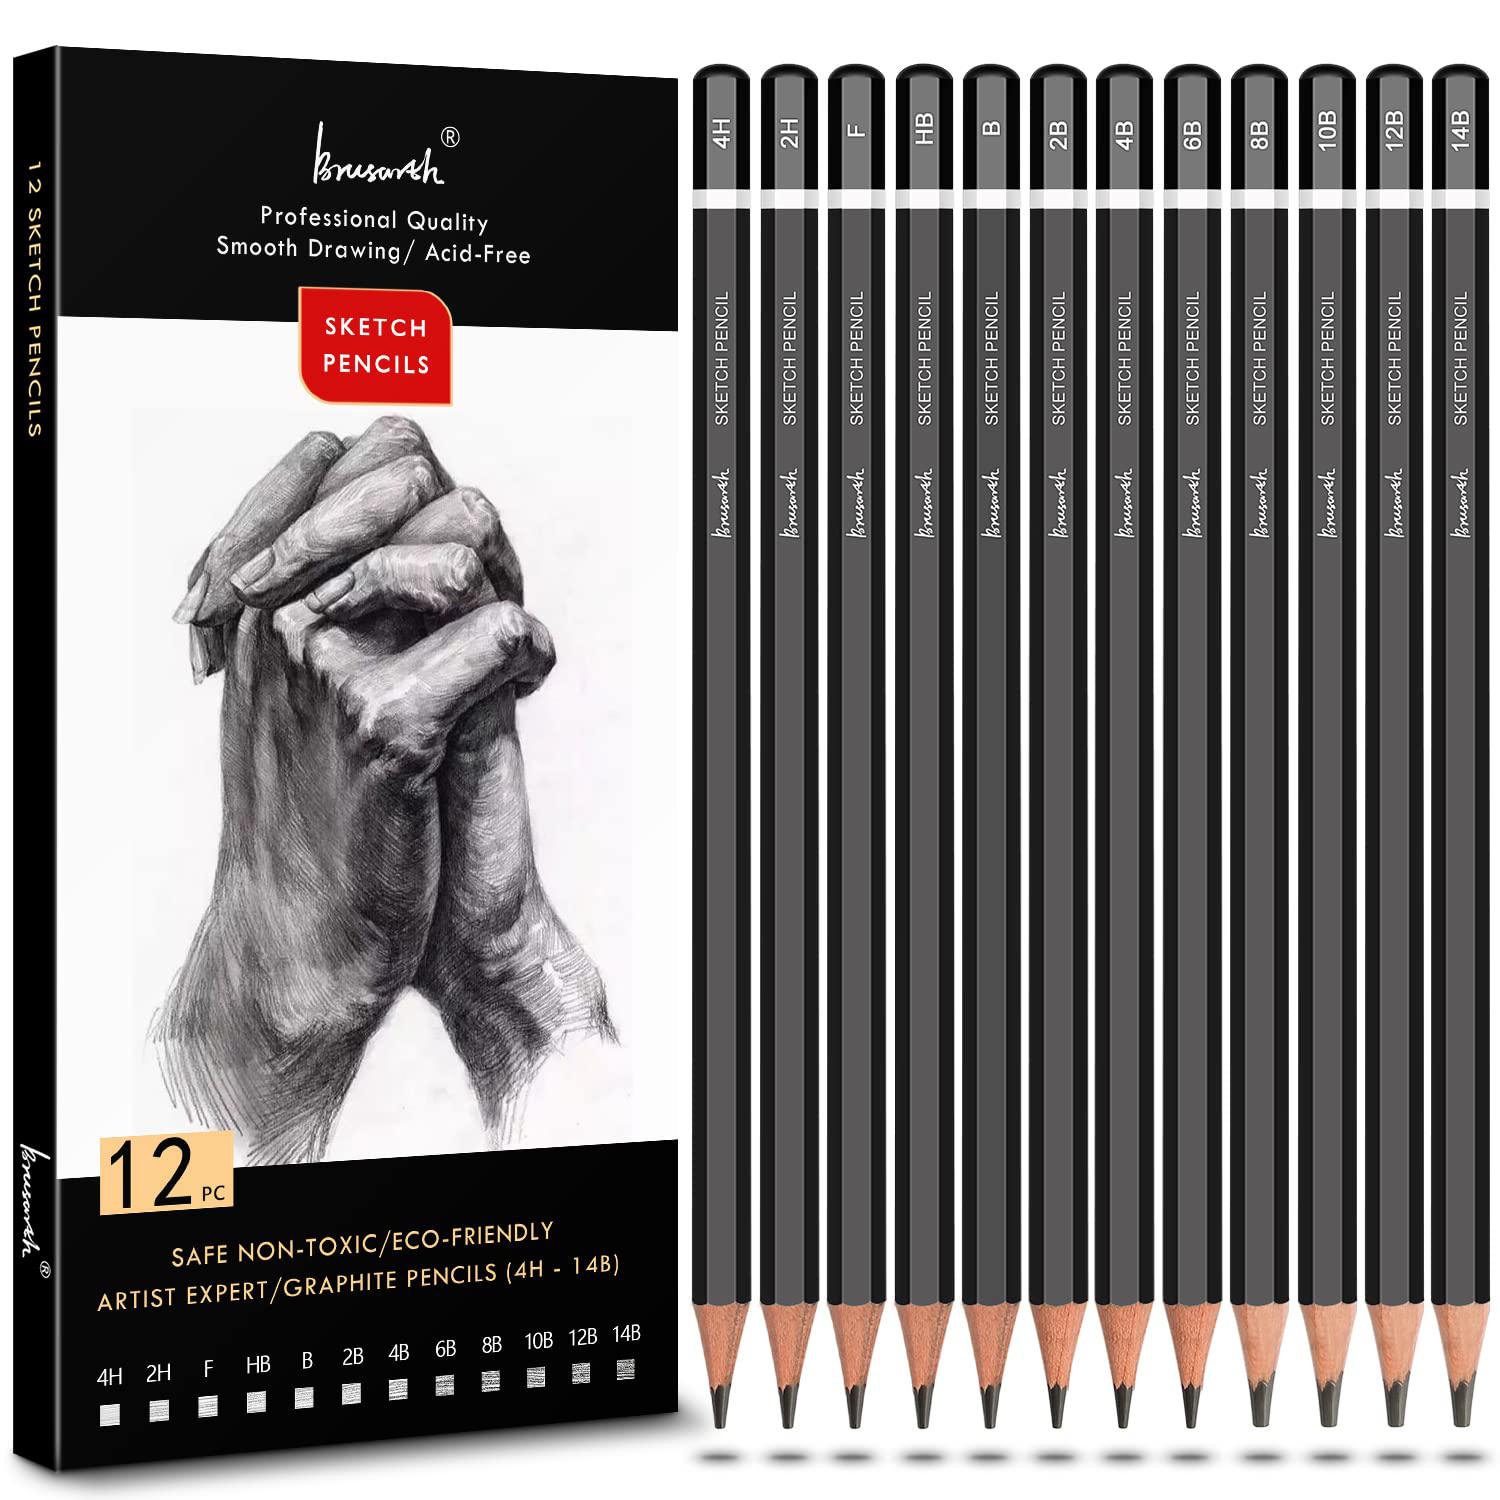 Brusarth bursarth- sketch pencils for drawing, 12 pack, drawing pencils,  art pencils, graphite pencils, graphite pencils for drawing